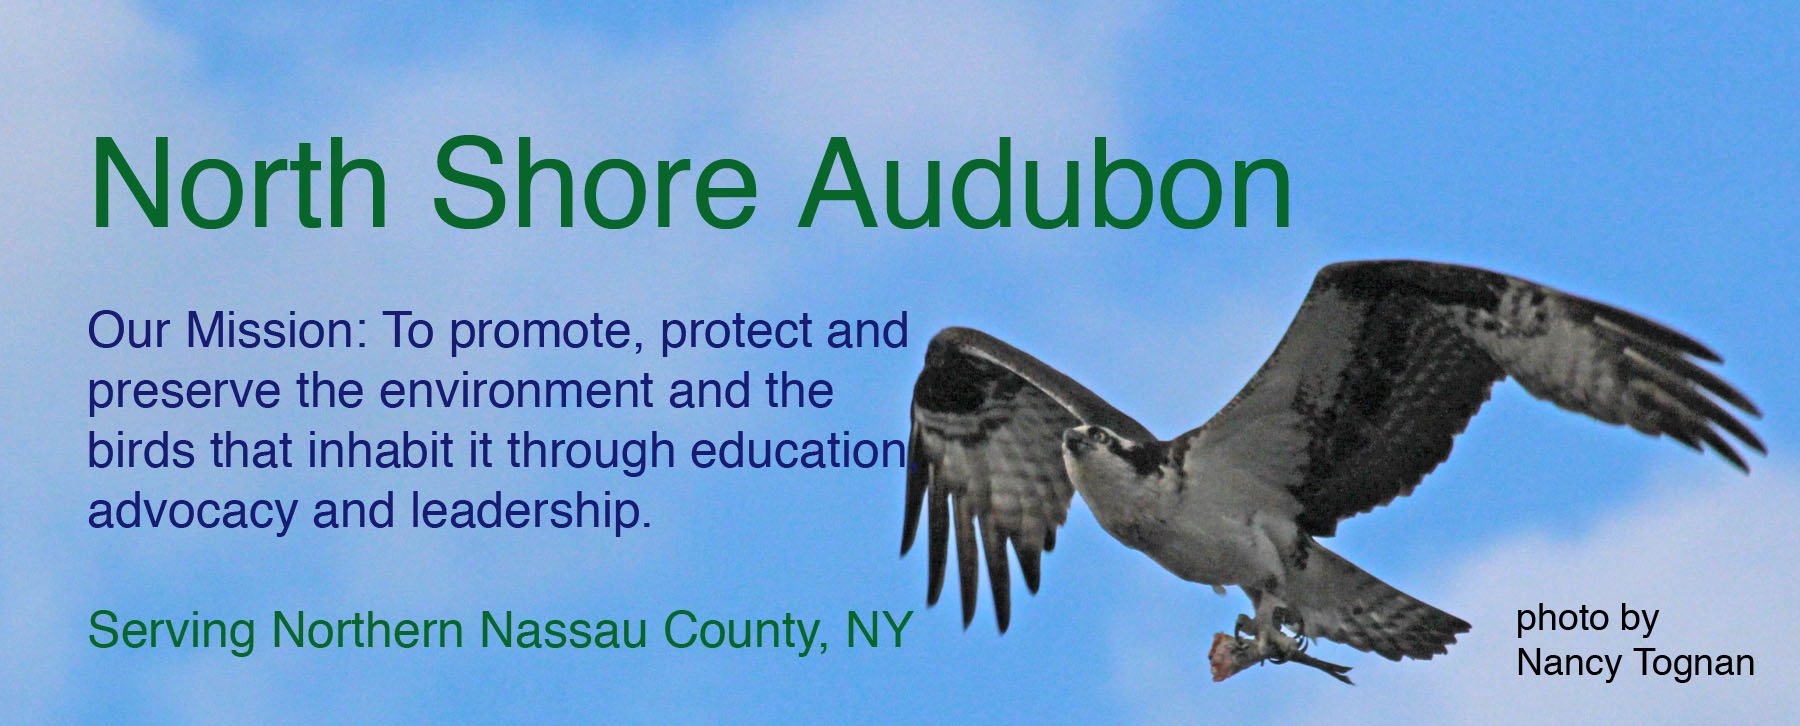 North Shore Audubon Society.jpg